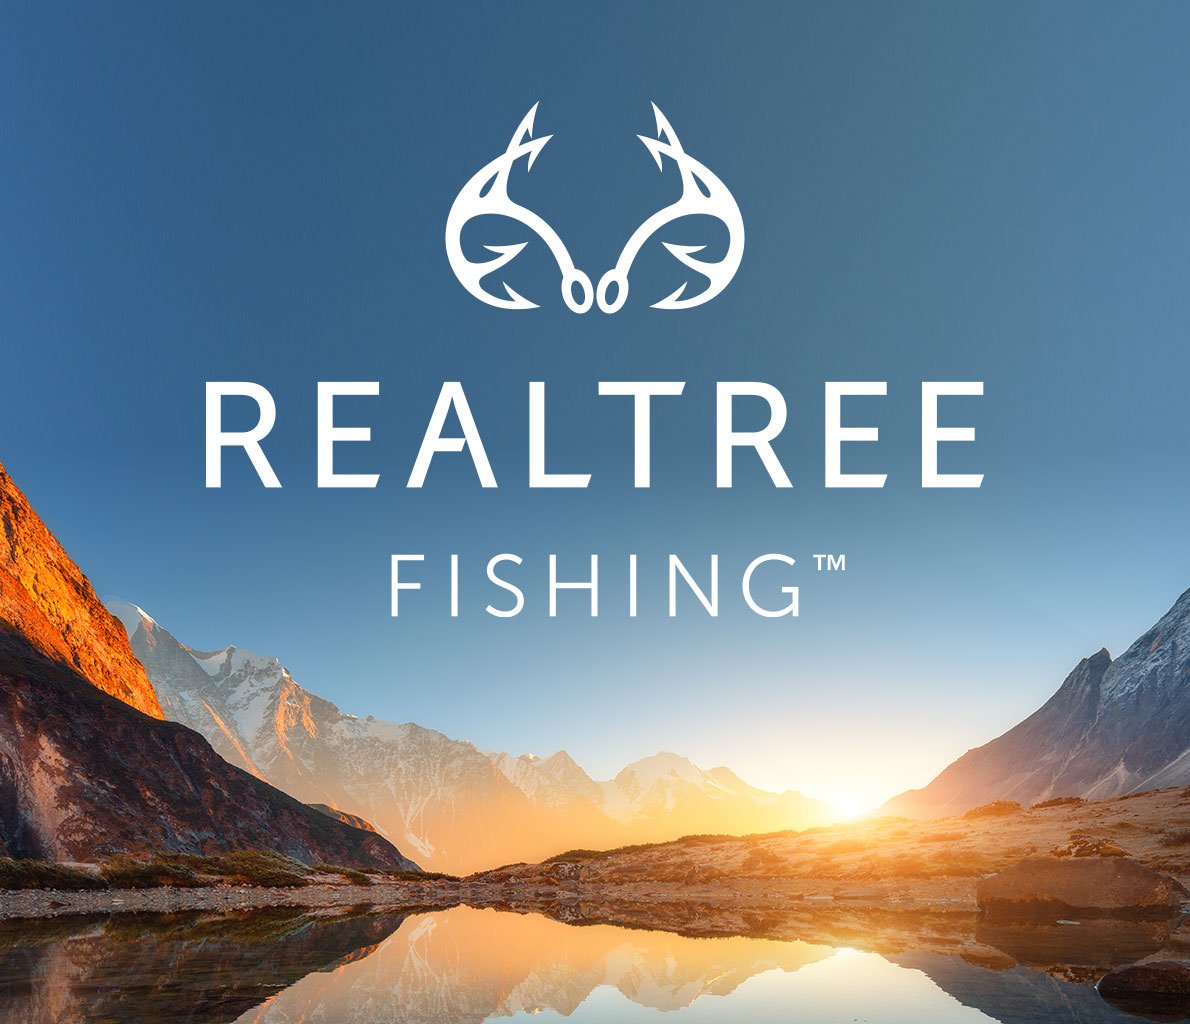 License Realtree Fishing Brand and Camo